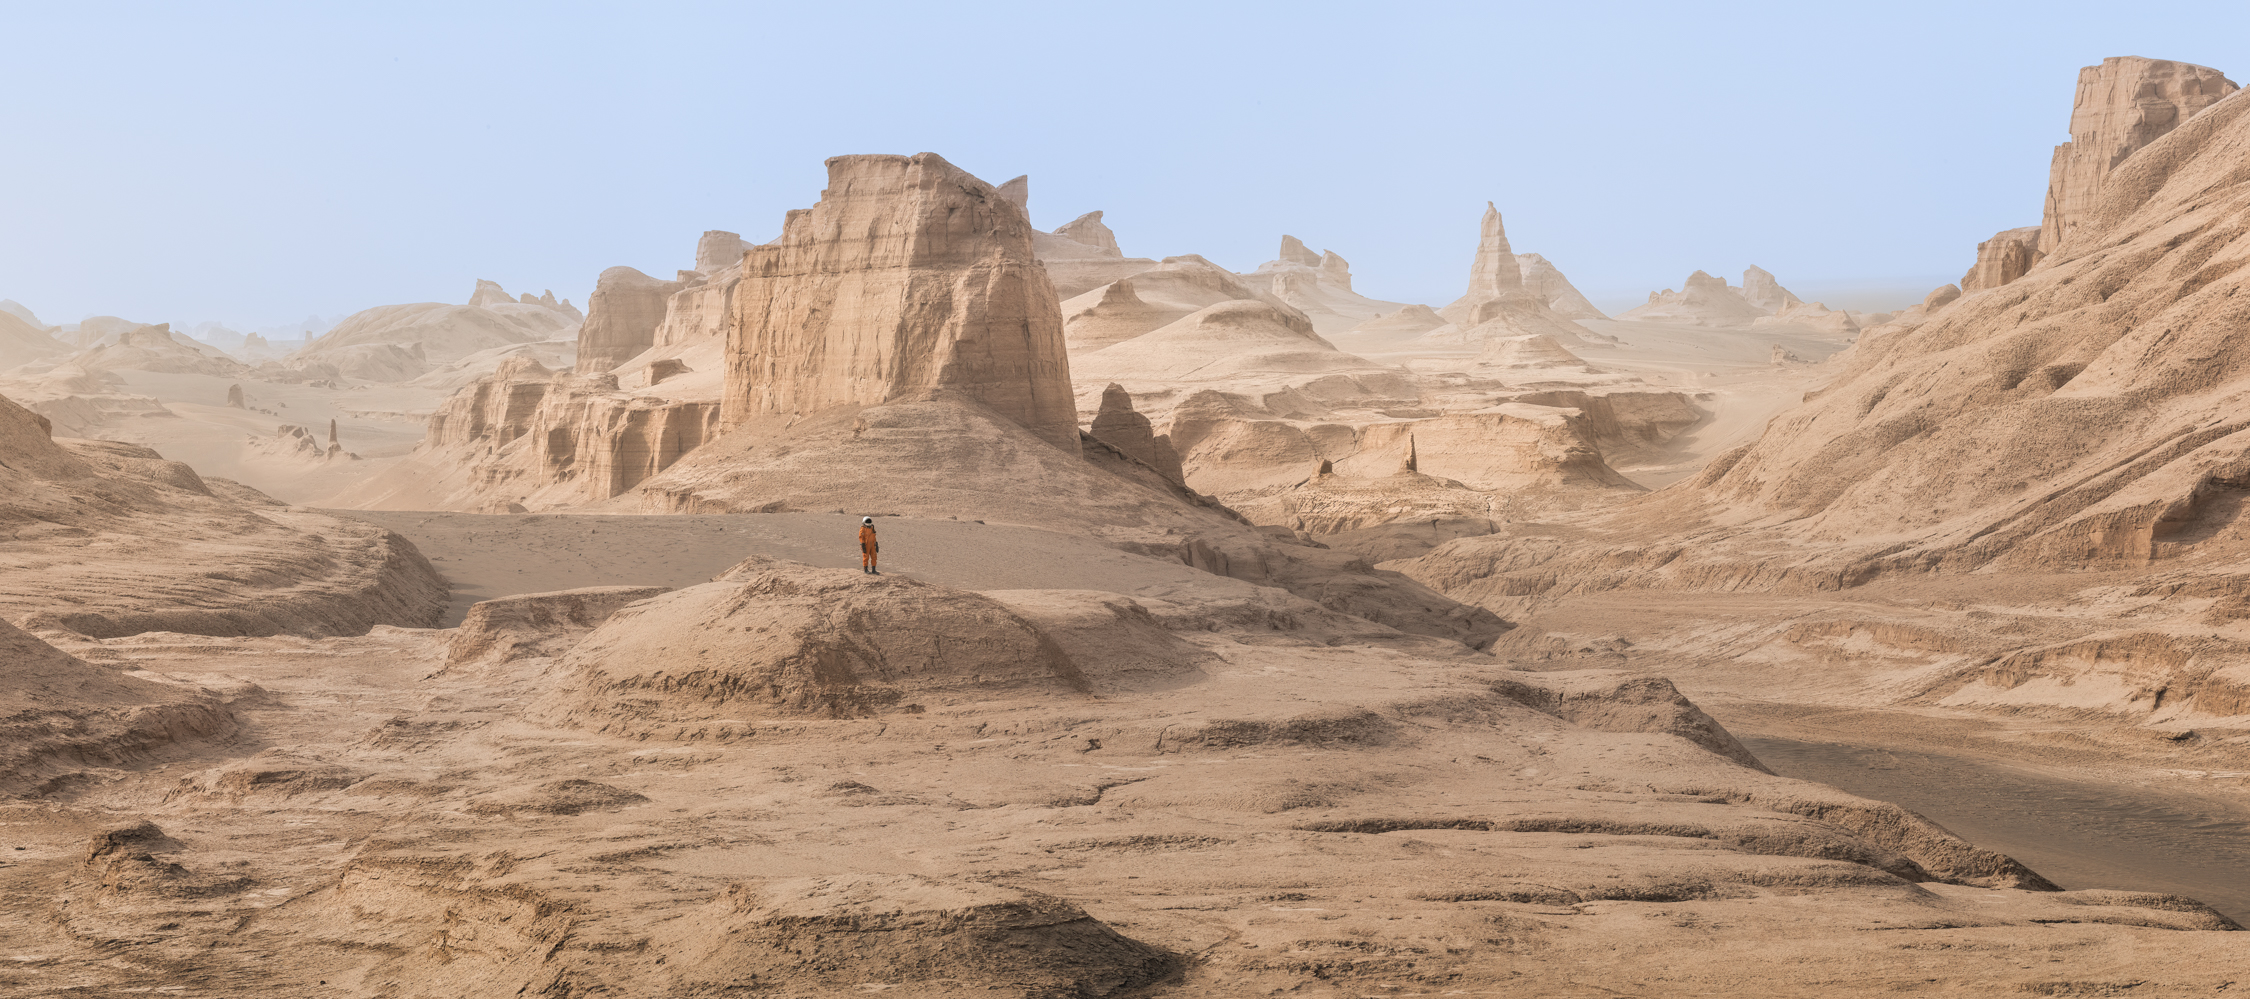 Astronaut in the alien-like landscsape of Iran's Lut Desert